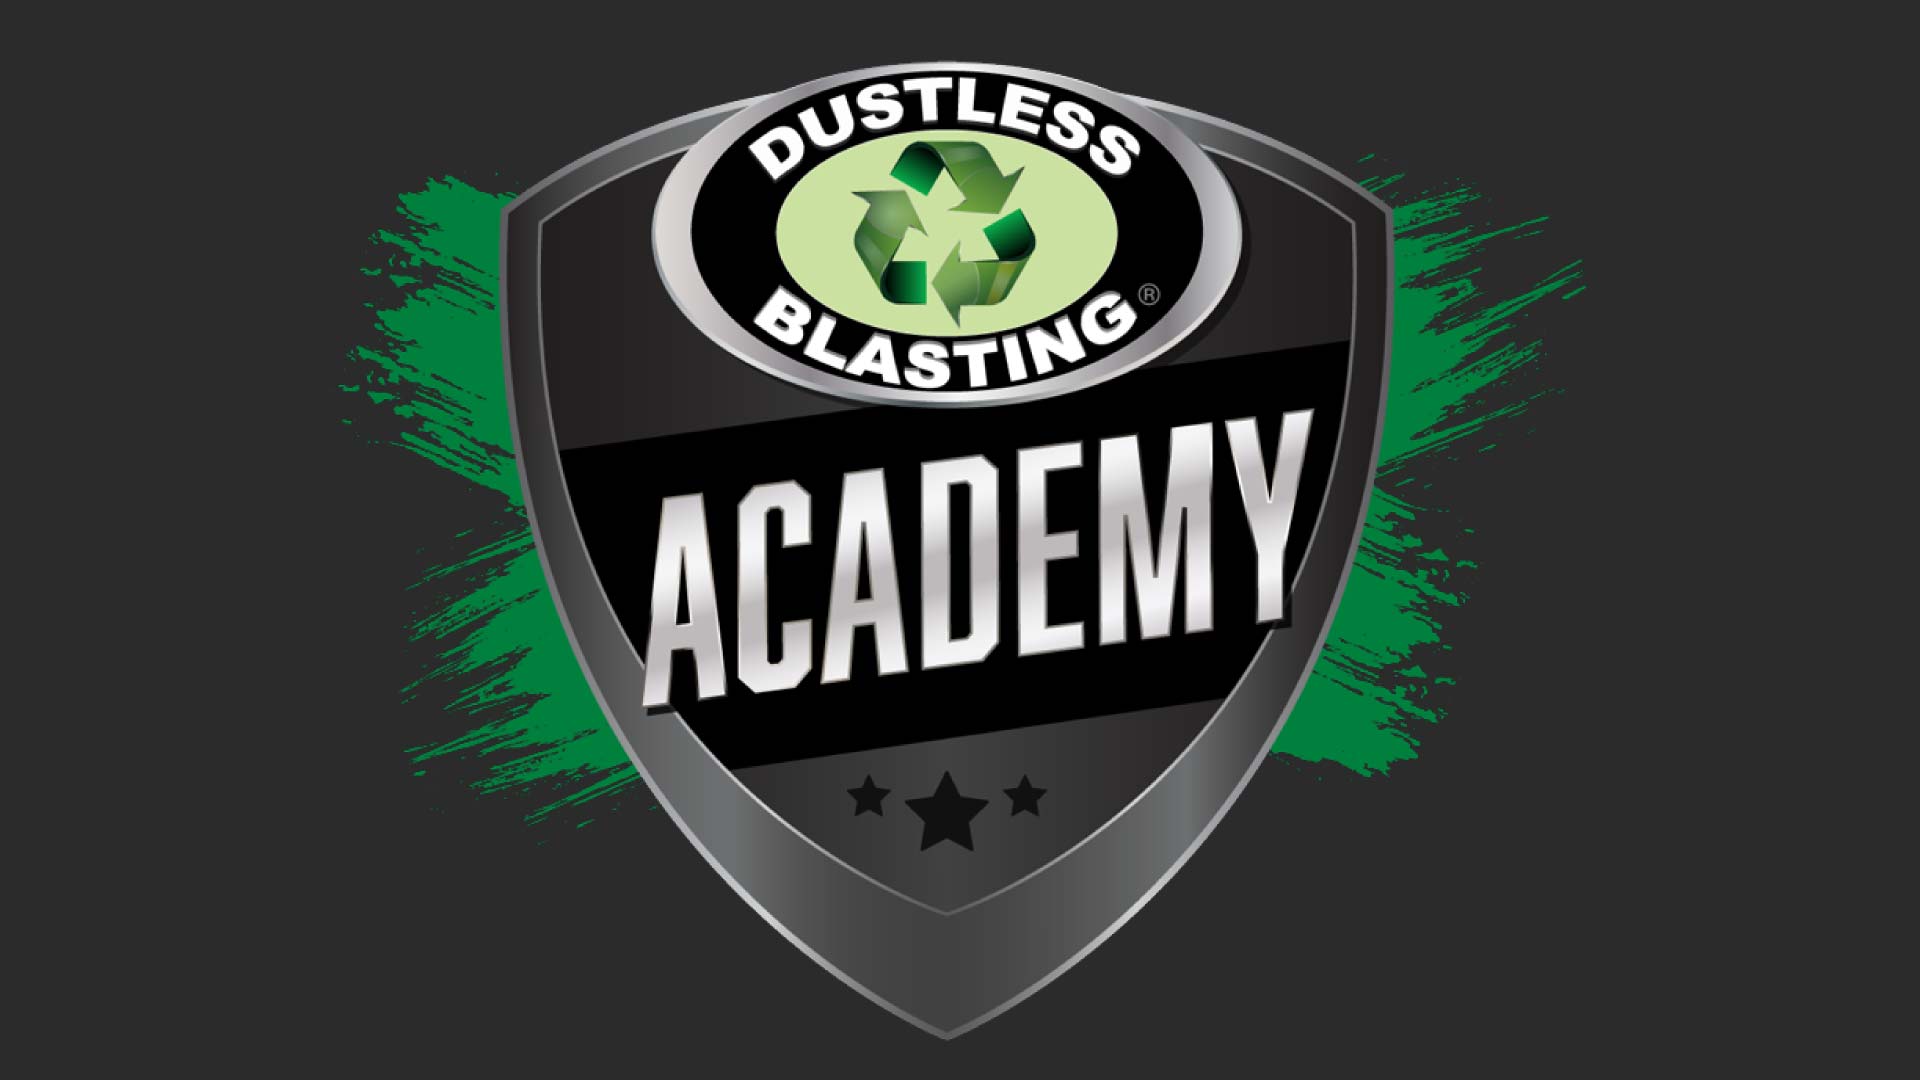 The Dustless Blasting Academy